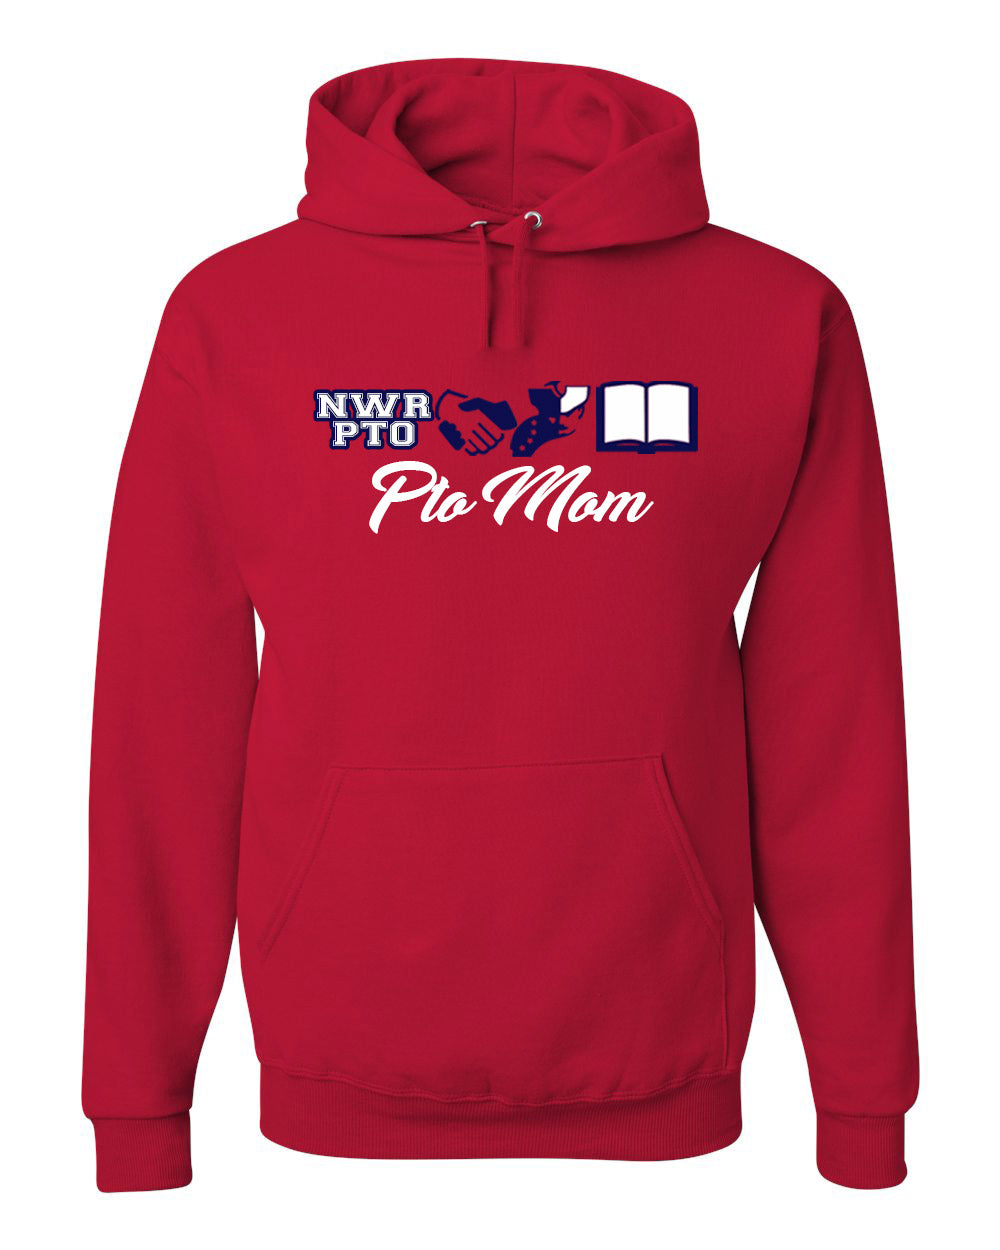 PTO Mom Hooded Sweatshirt